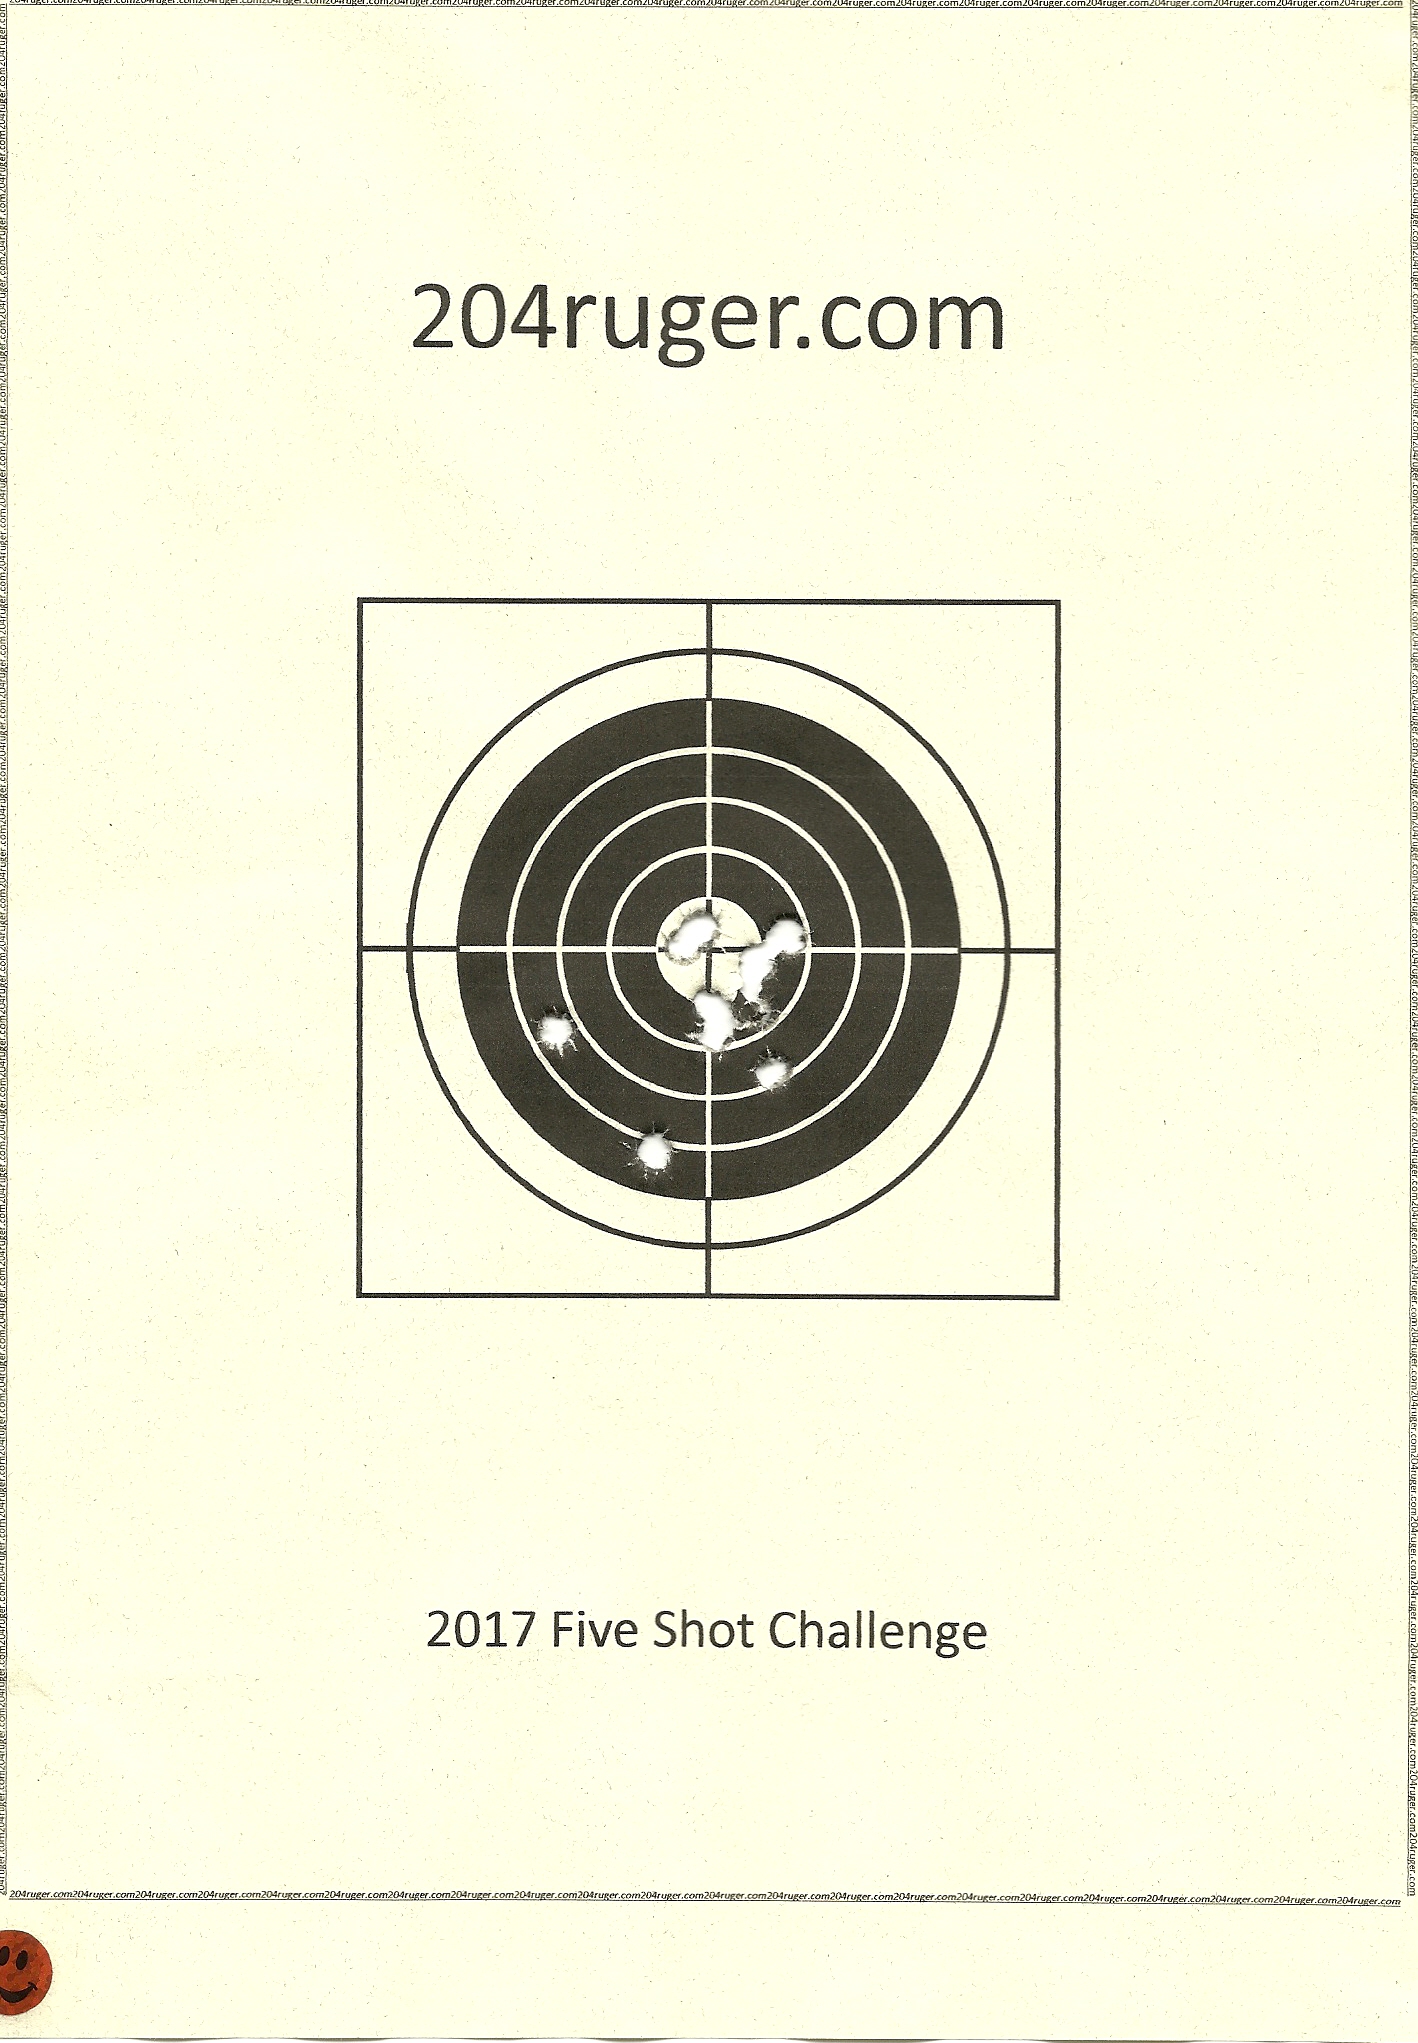 5 shot challenge.jpg